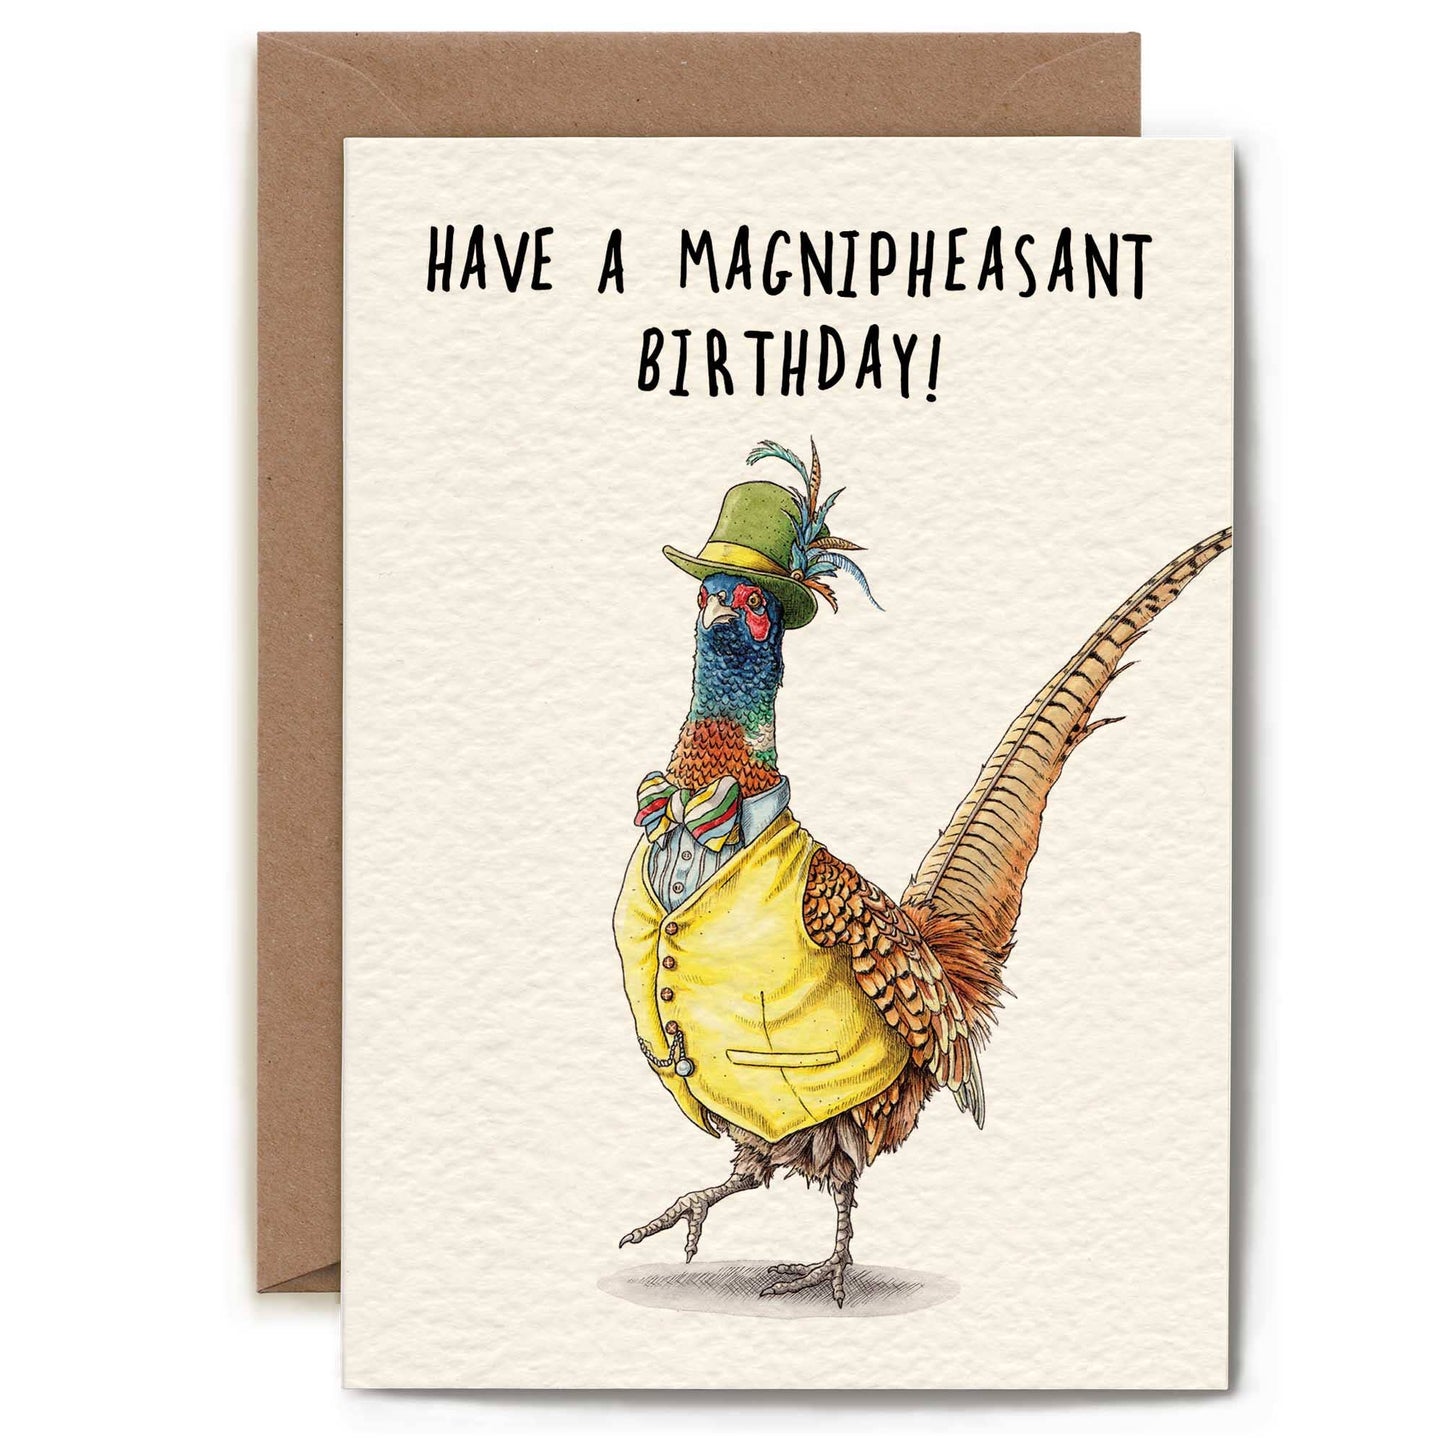 Magnipheasant Birthday Card